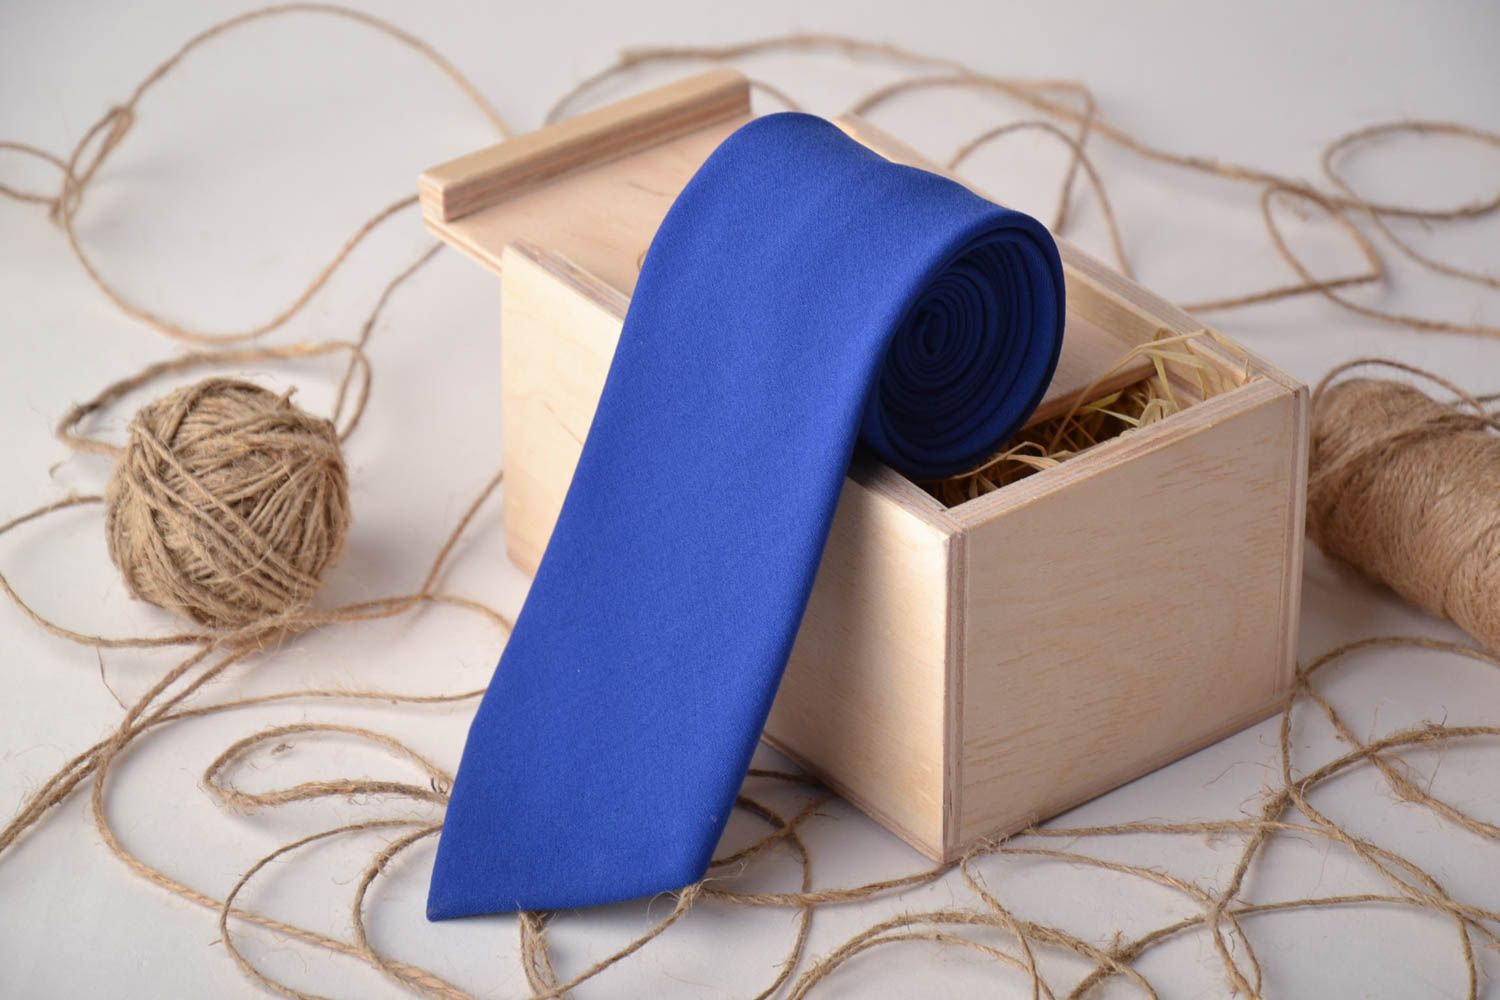 Cravate bleu unicolore faite main photo 1